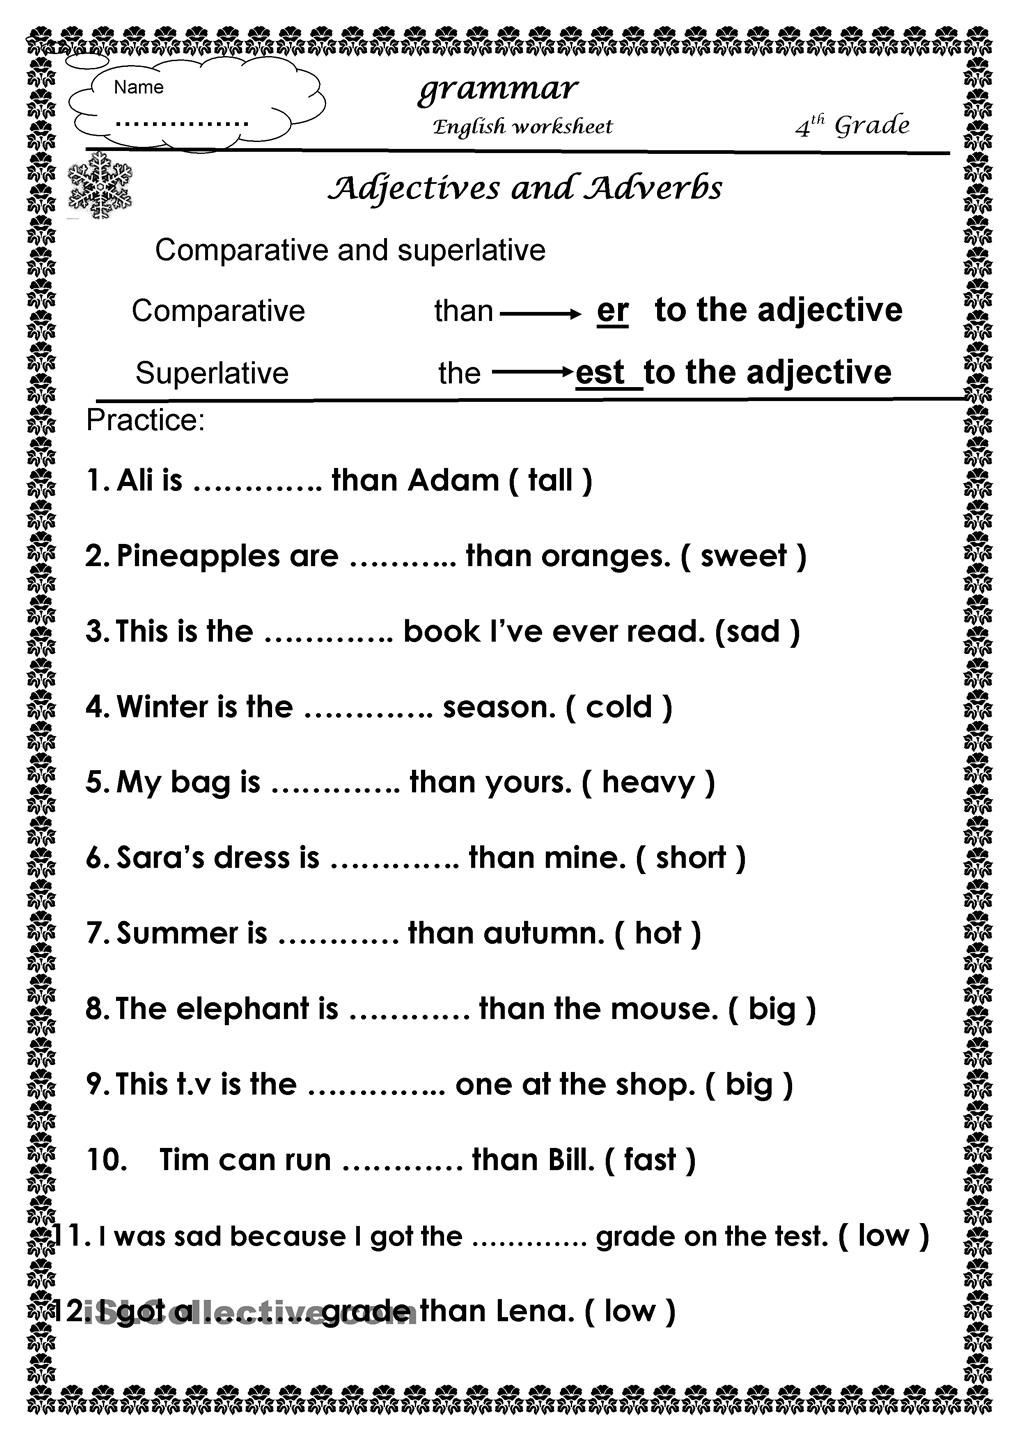 English Worksheet for Grade 2 Parative and Superlative